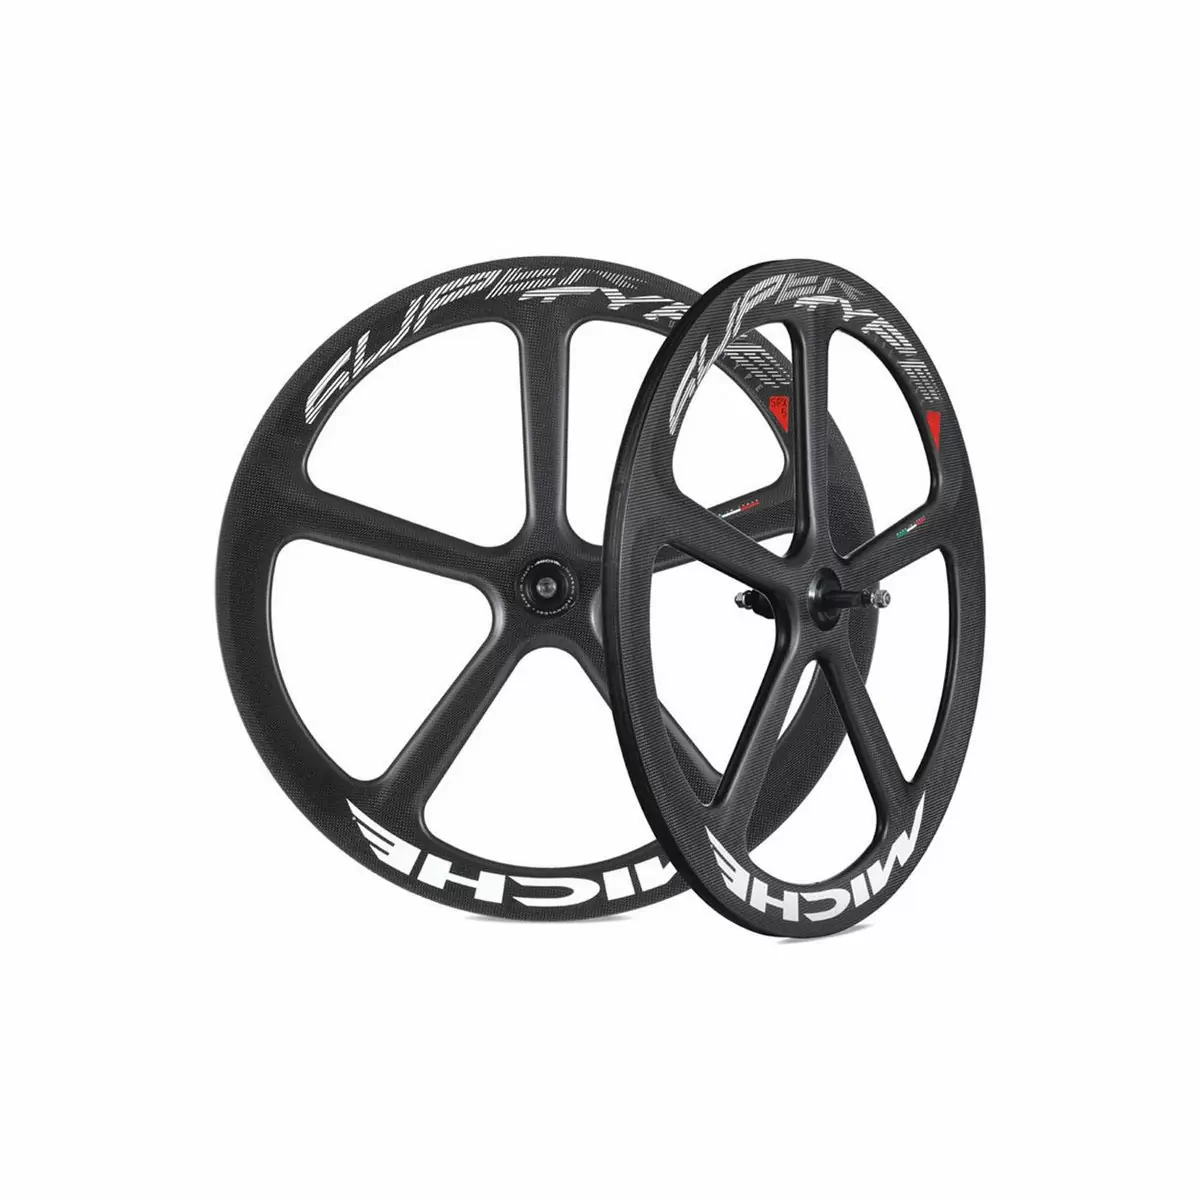 wheelset supertype spx5 carbon 3k tubular track black v17 - image